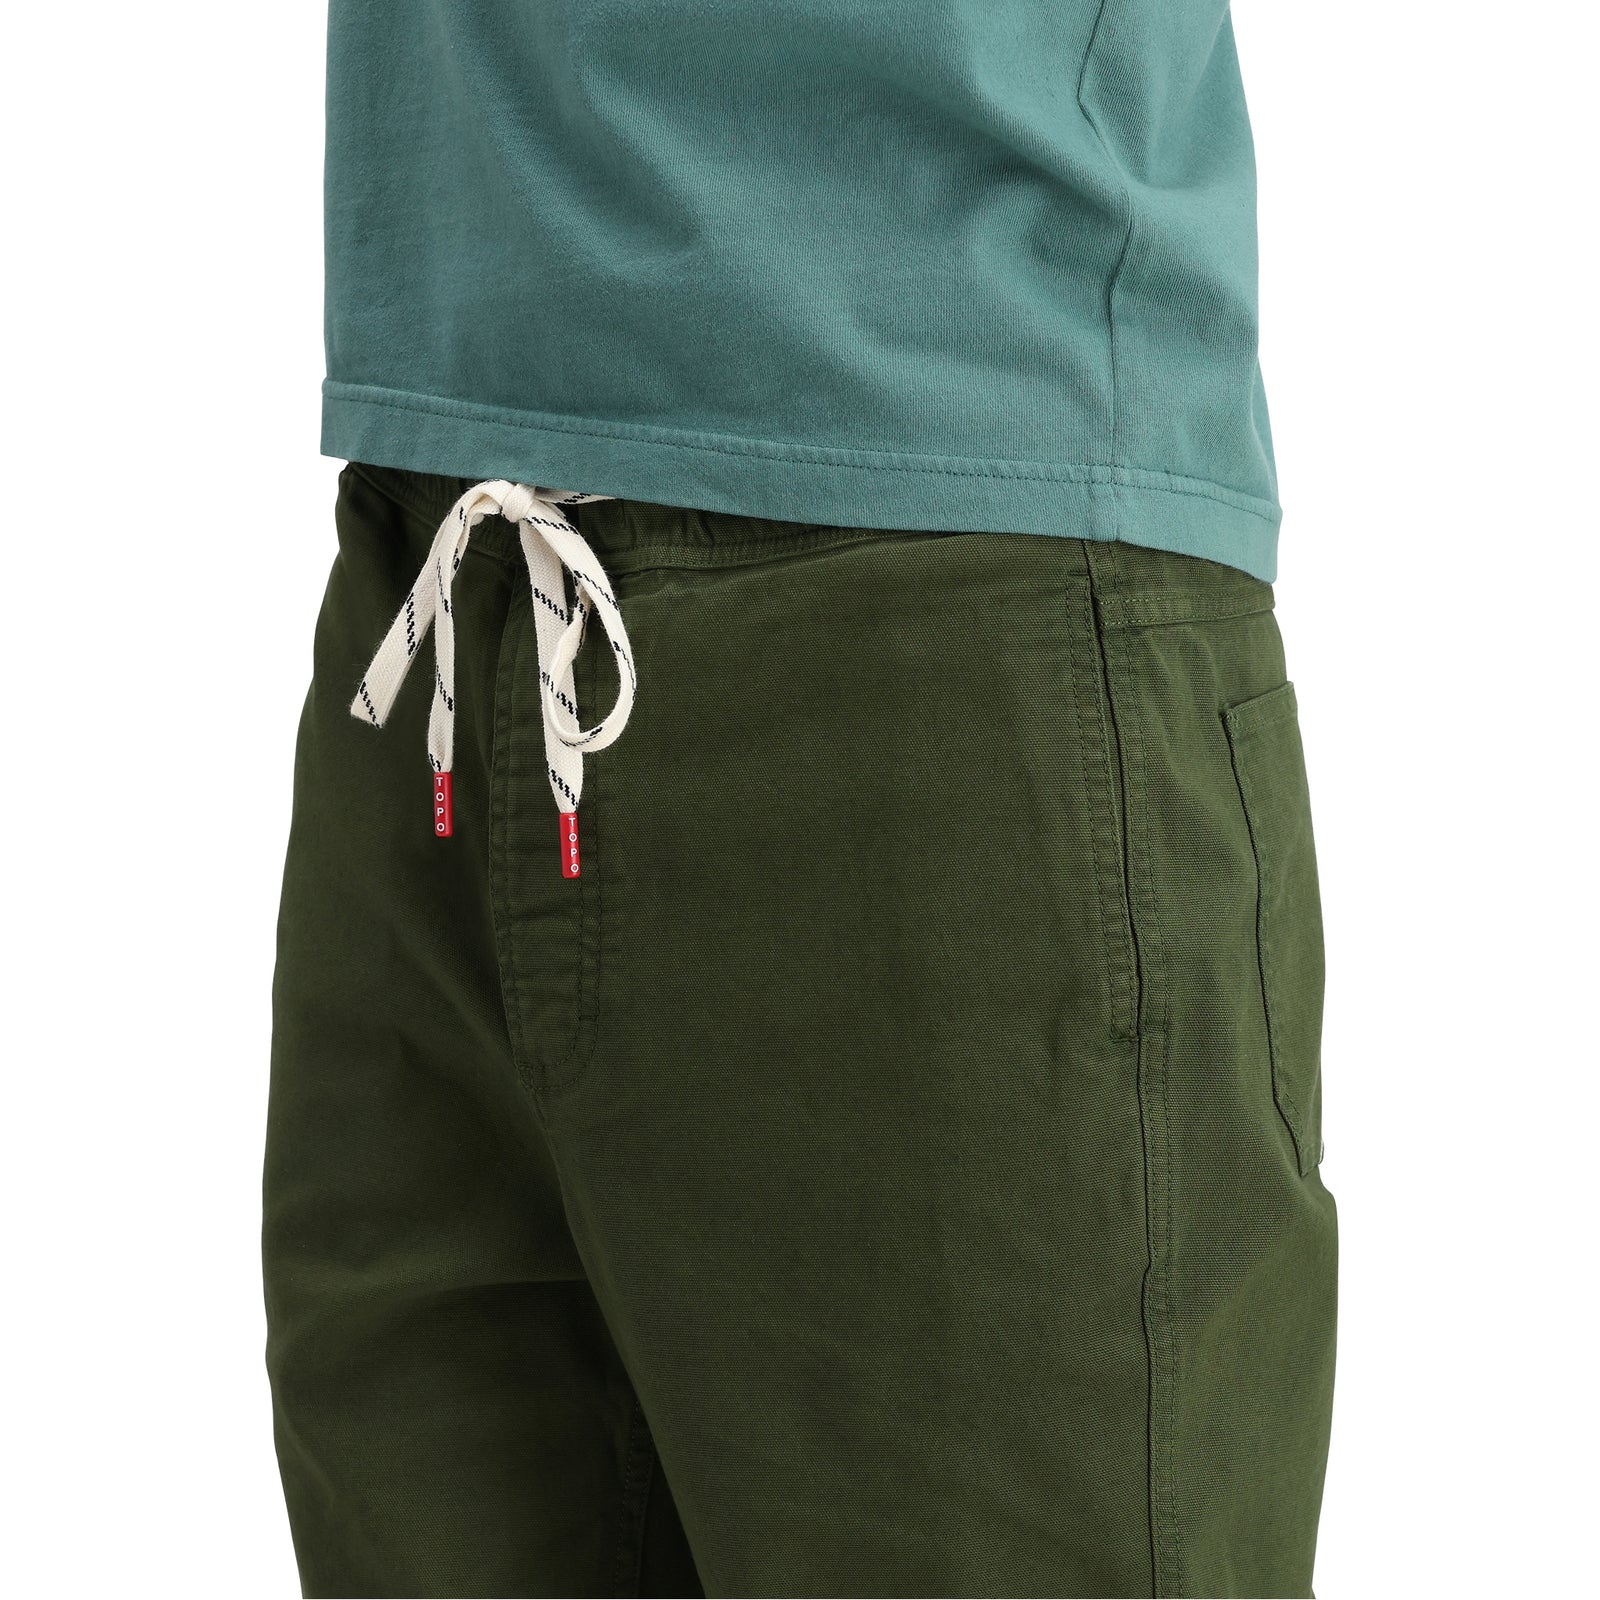 Detail shot of Topo Designs Dirt Pants Classic - Men's in "Olive"